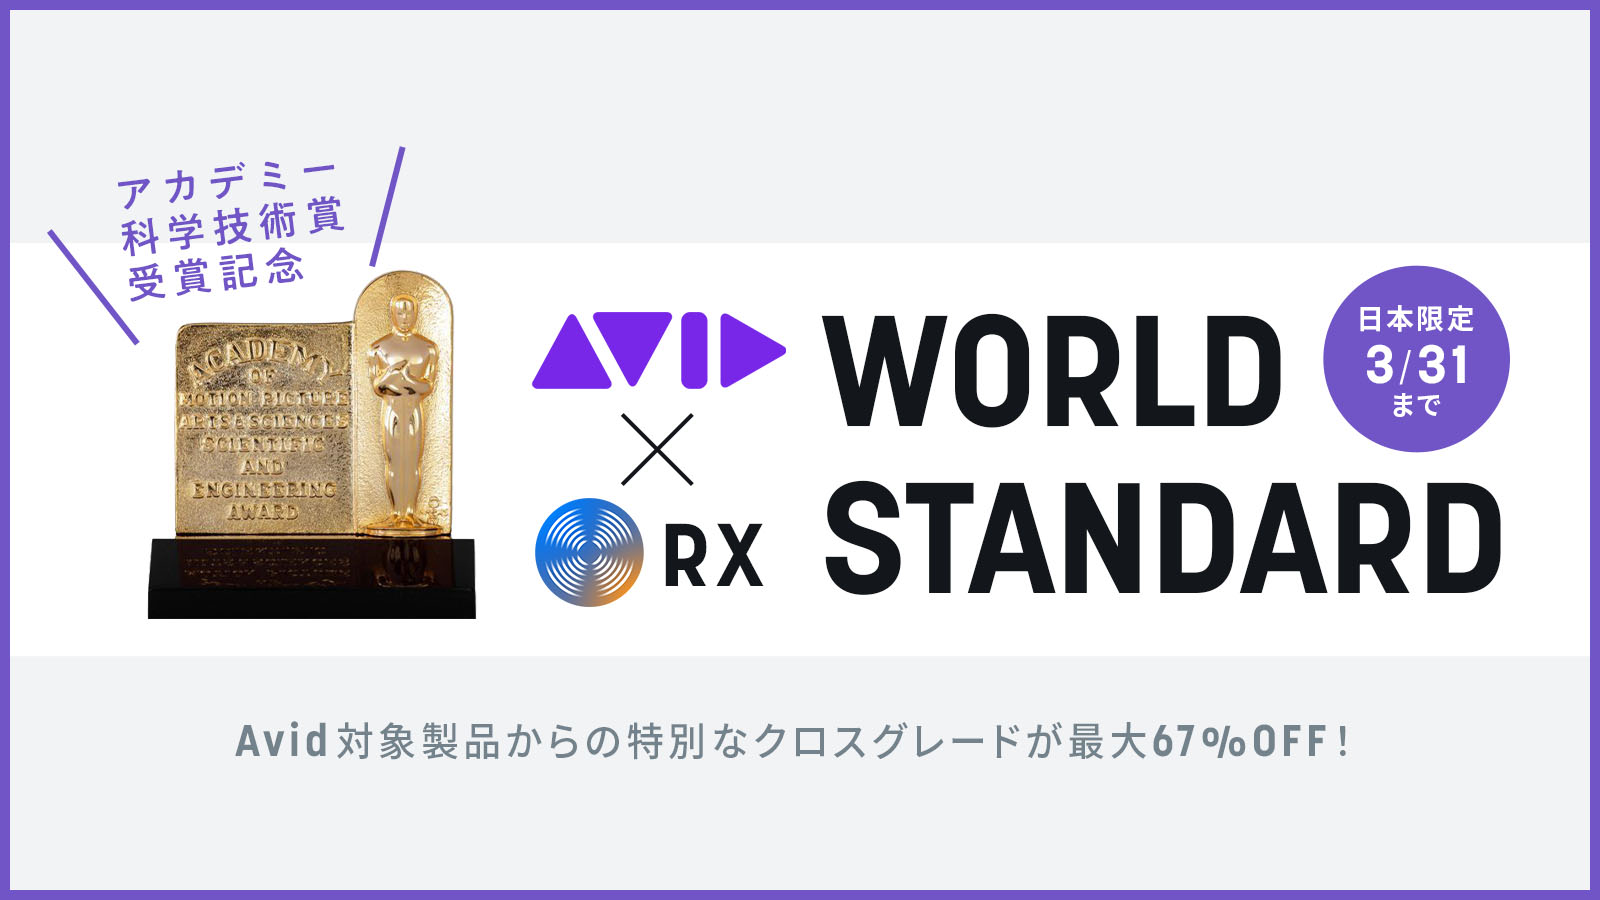 iZotope RX 〜アカデミー科学技術賞受賞記念〜 World Standardキャンペーン